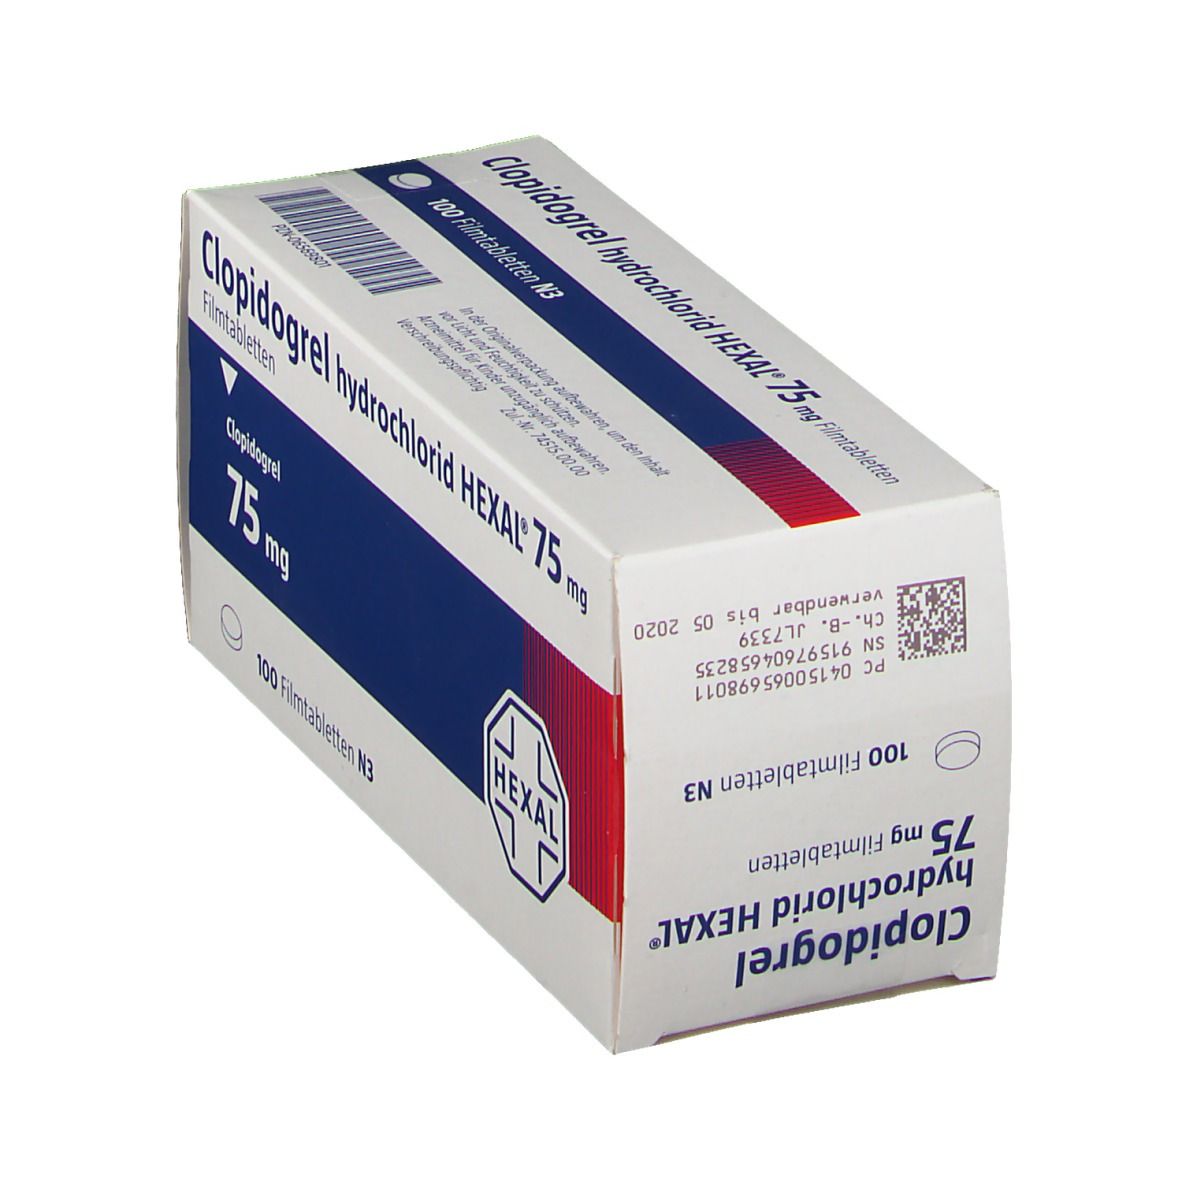 Clopidogrel hydrochlorid HEXAL® 75 mg